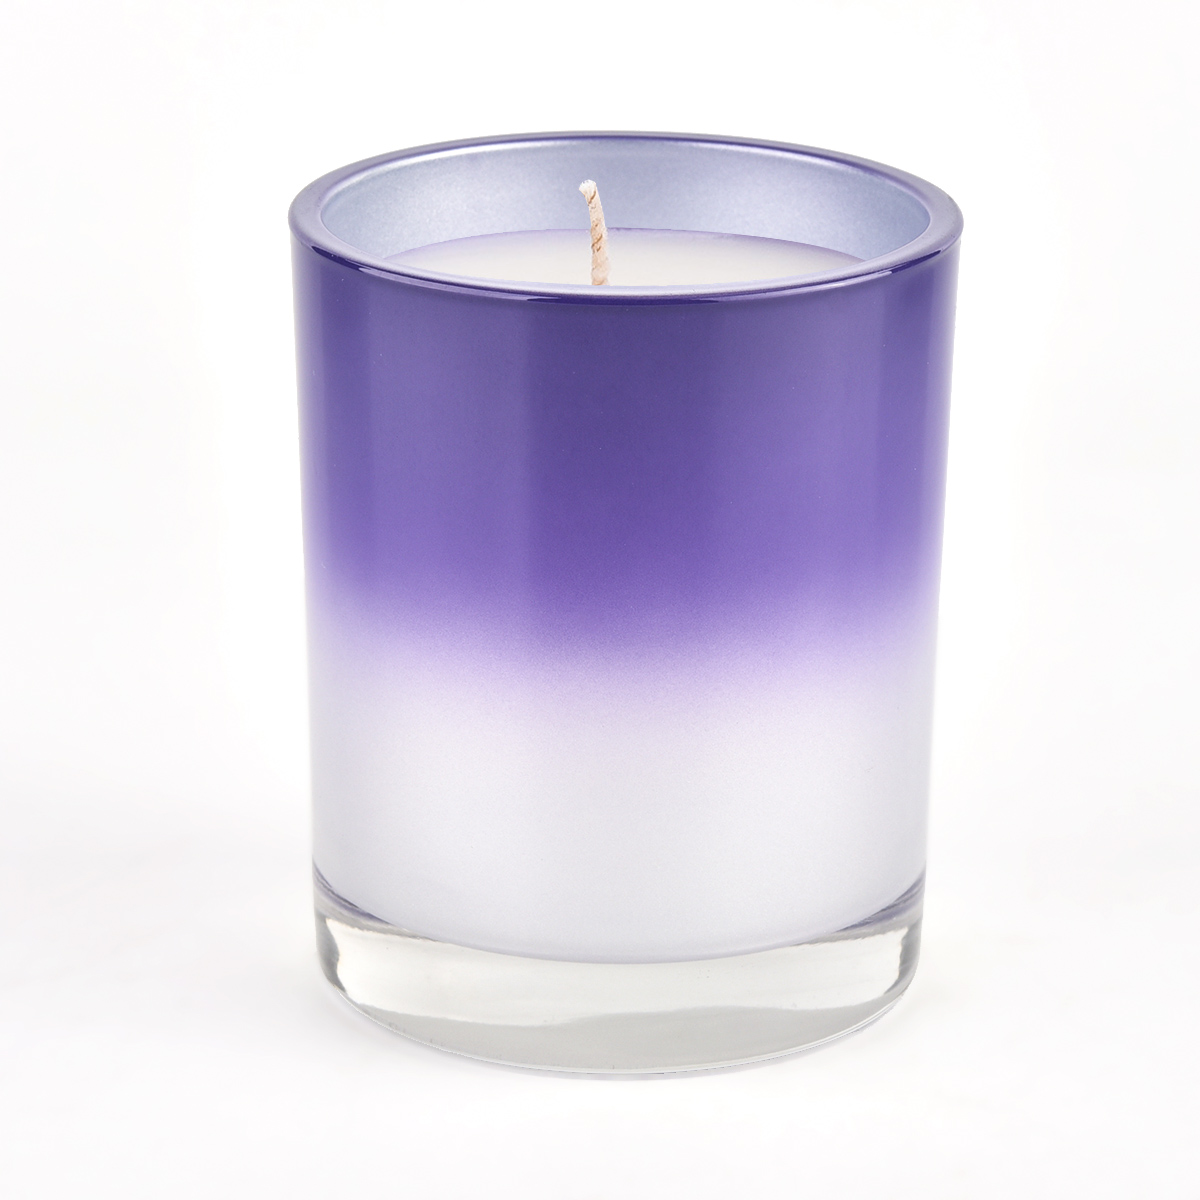 Tarro de vela de vidrio brillante de nuevo diseño con proveedor púrpura degradado